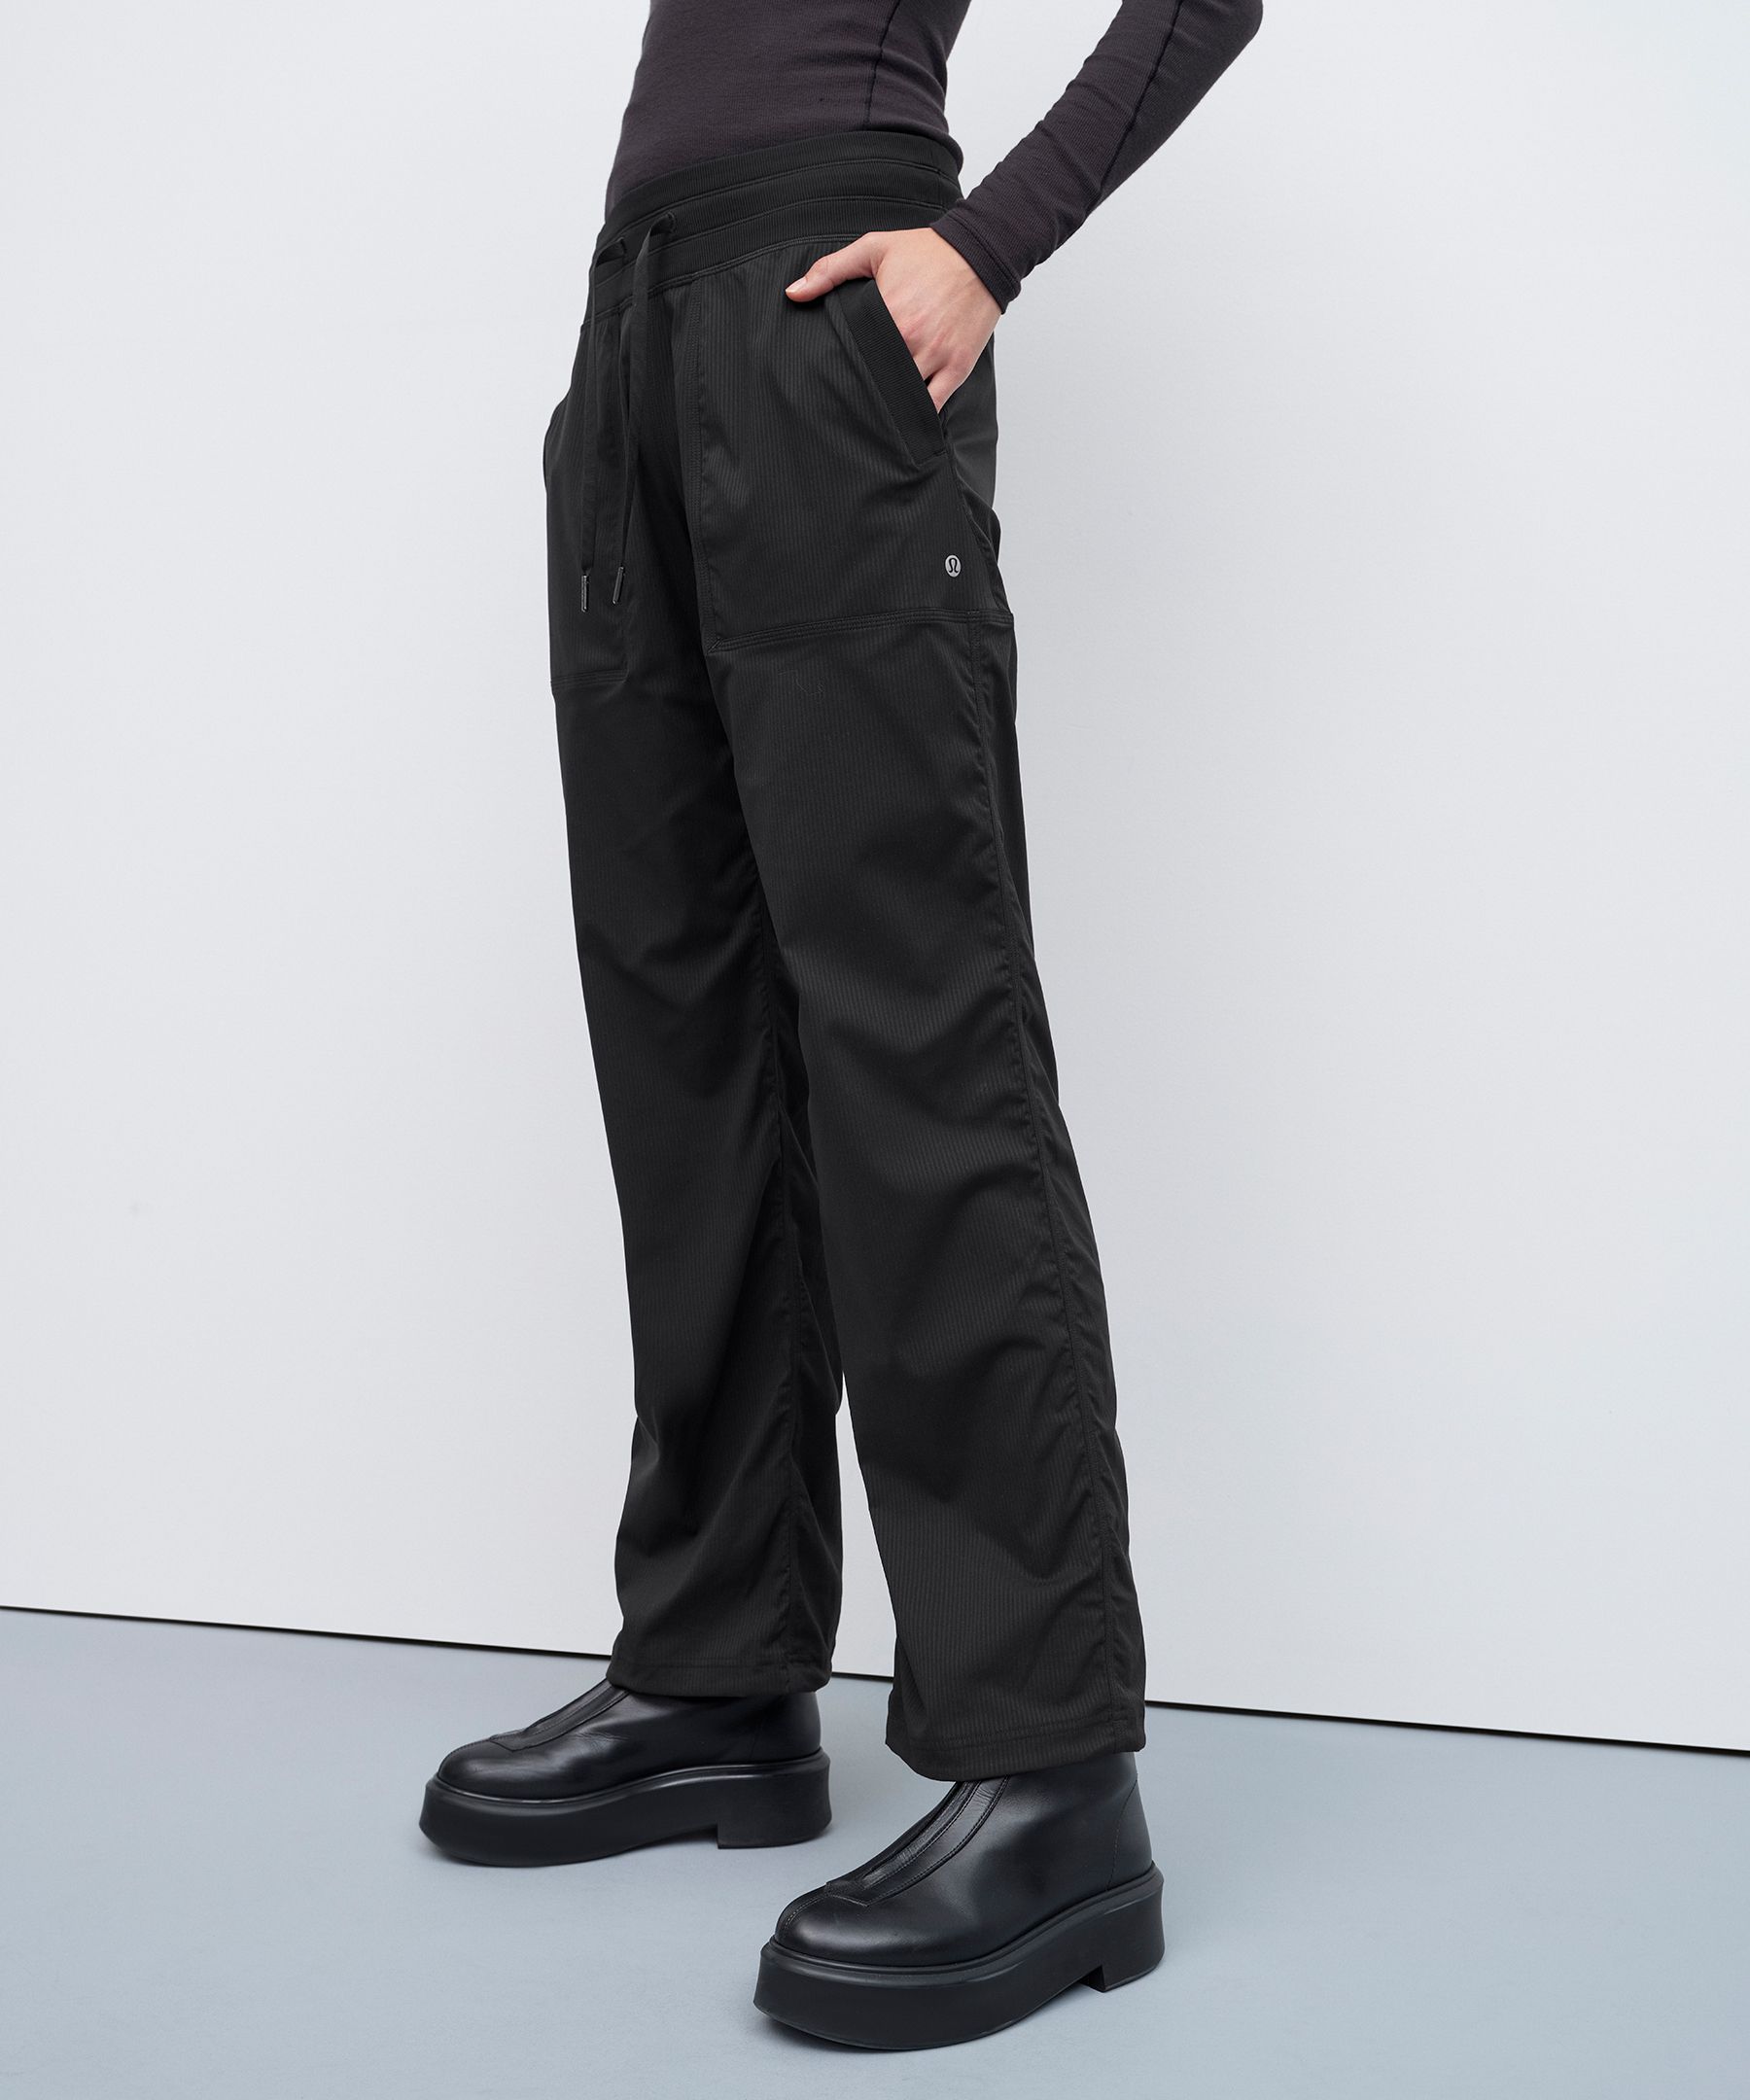 Lululemon Dance Studio Pants 24” Inseam Crop Black Pull On Straight size 4  - $45 - From J